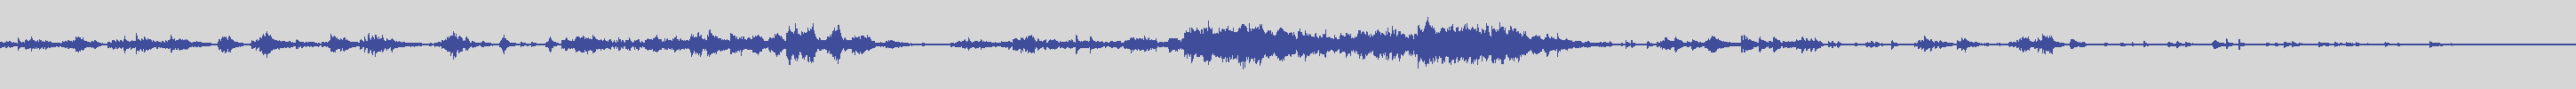 big_music_classic [BMC009] Claude Debussy, Corrado Rossi - Reflets Dan L'eau [] audio wave form